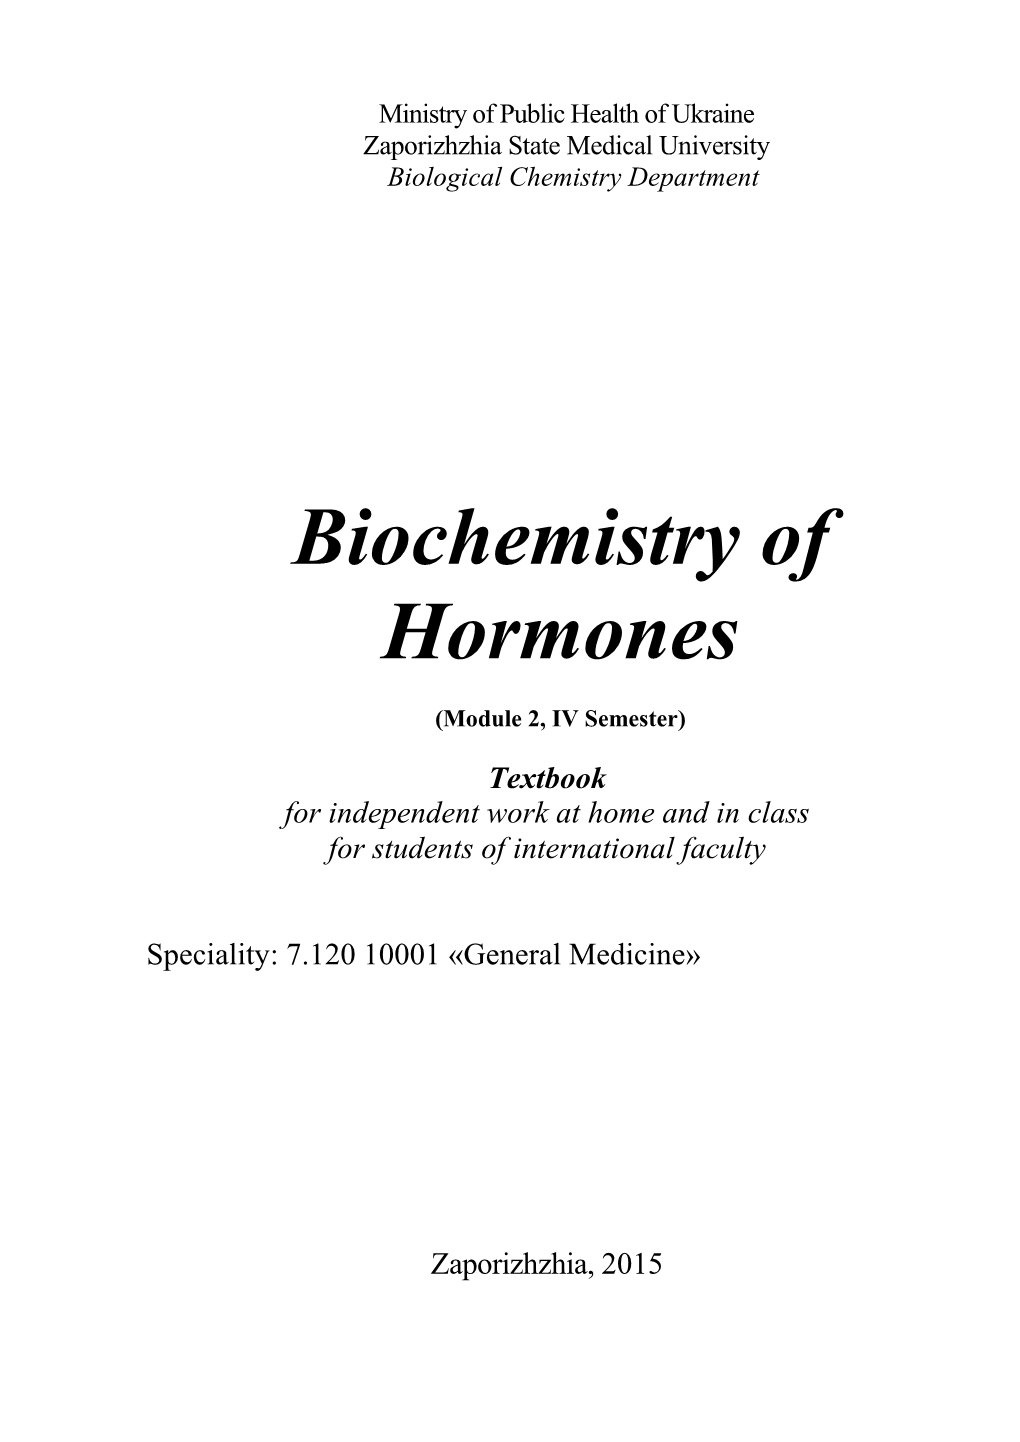 Biochemistry of Hormones